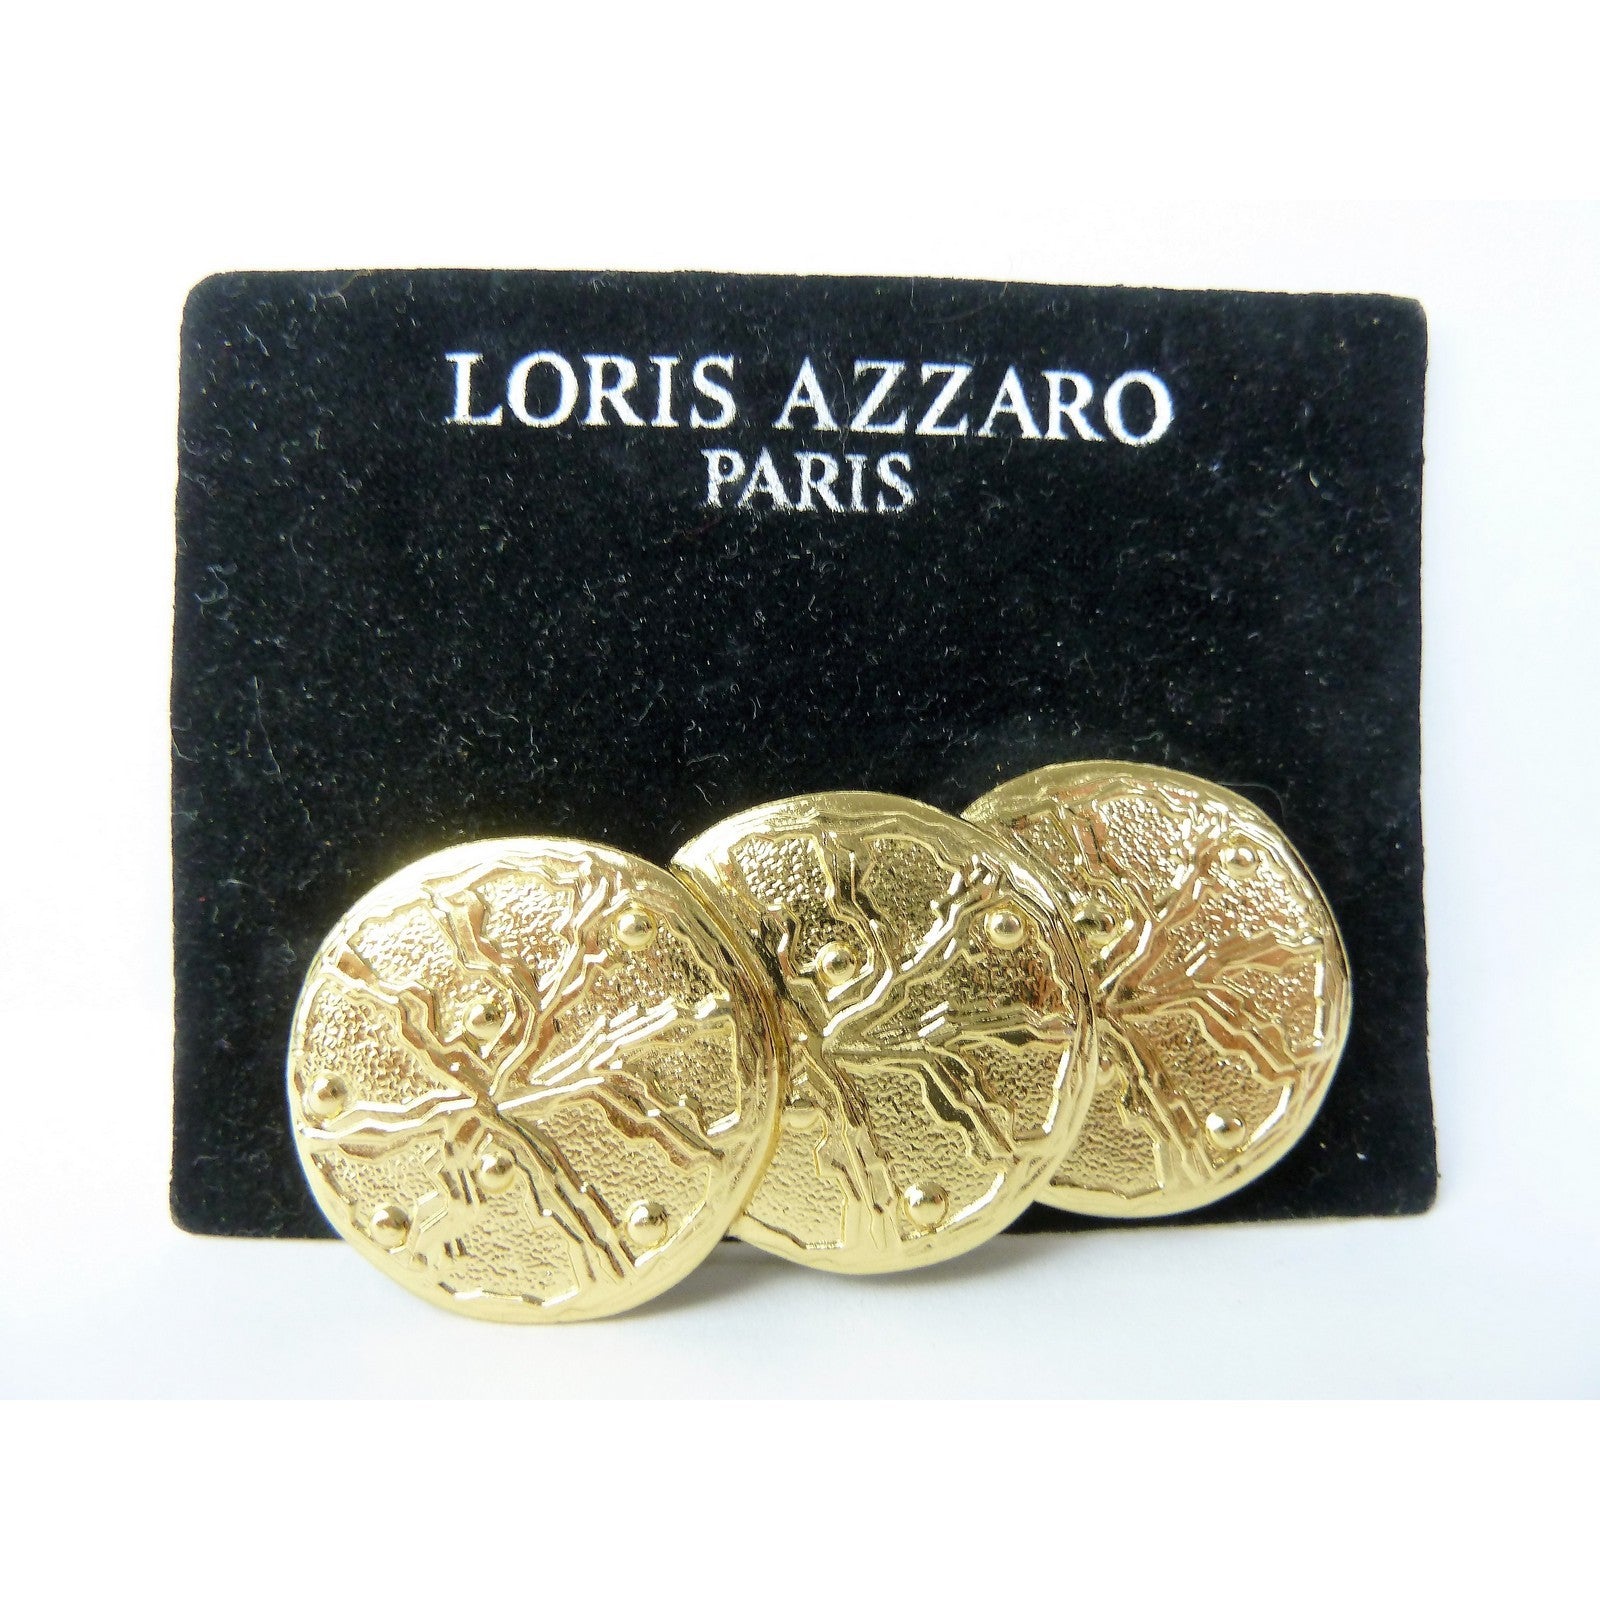 Loris Azzaro Medallions Brooch Costume Jewelry Vintage Gold